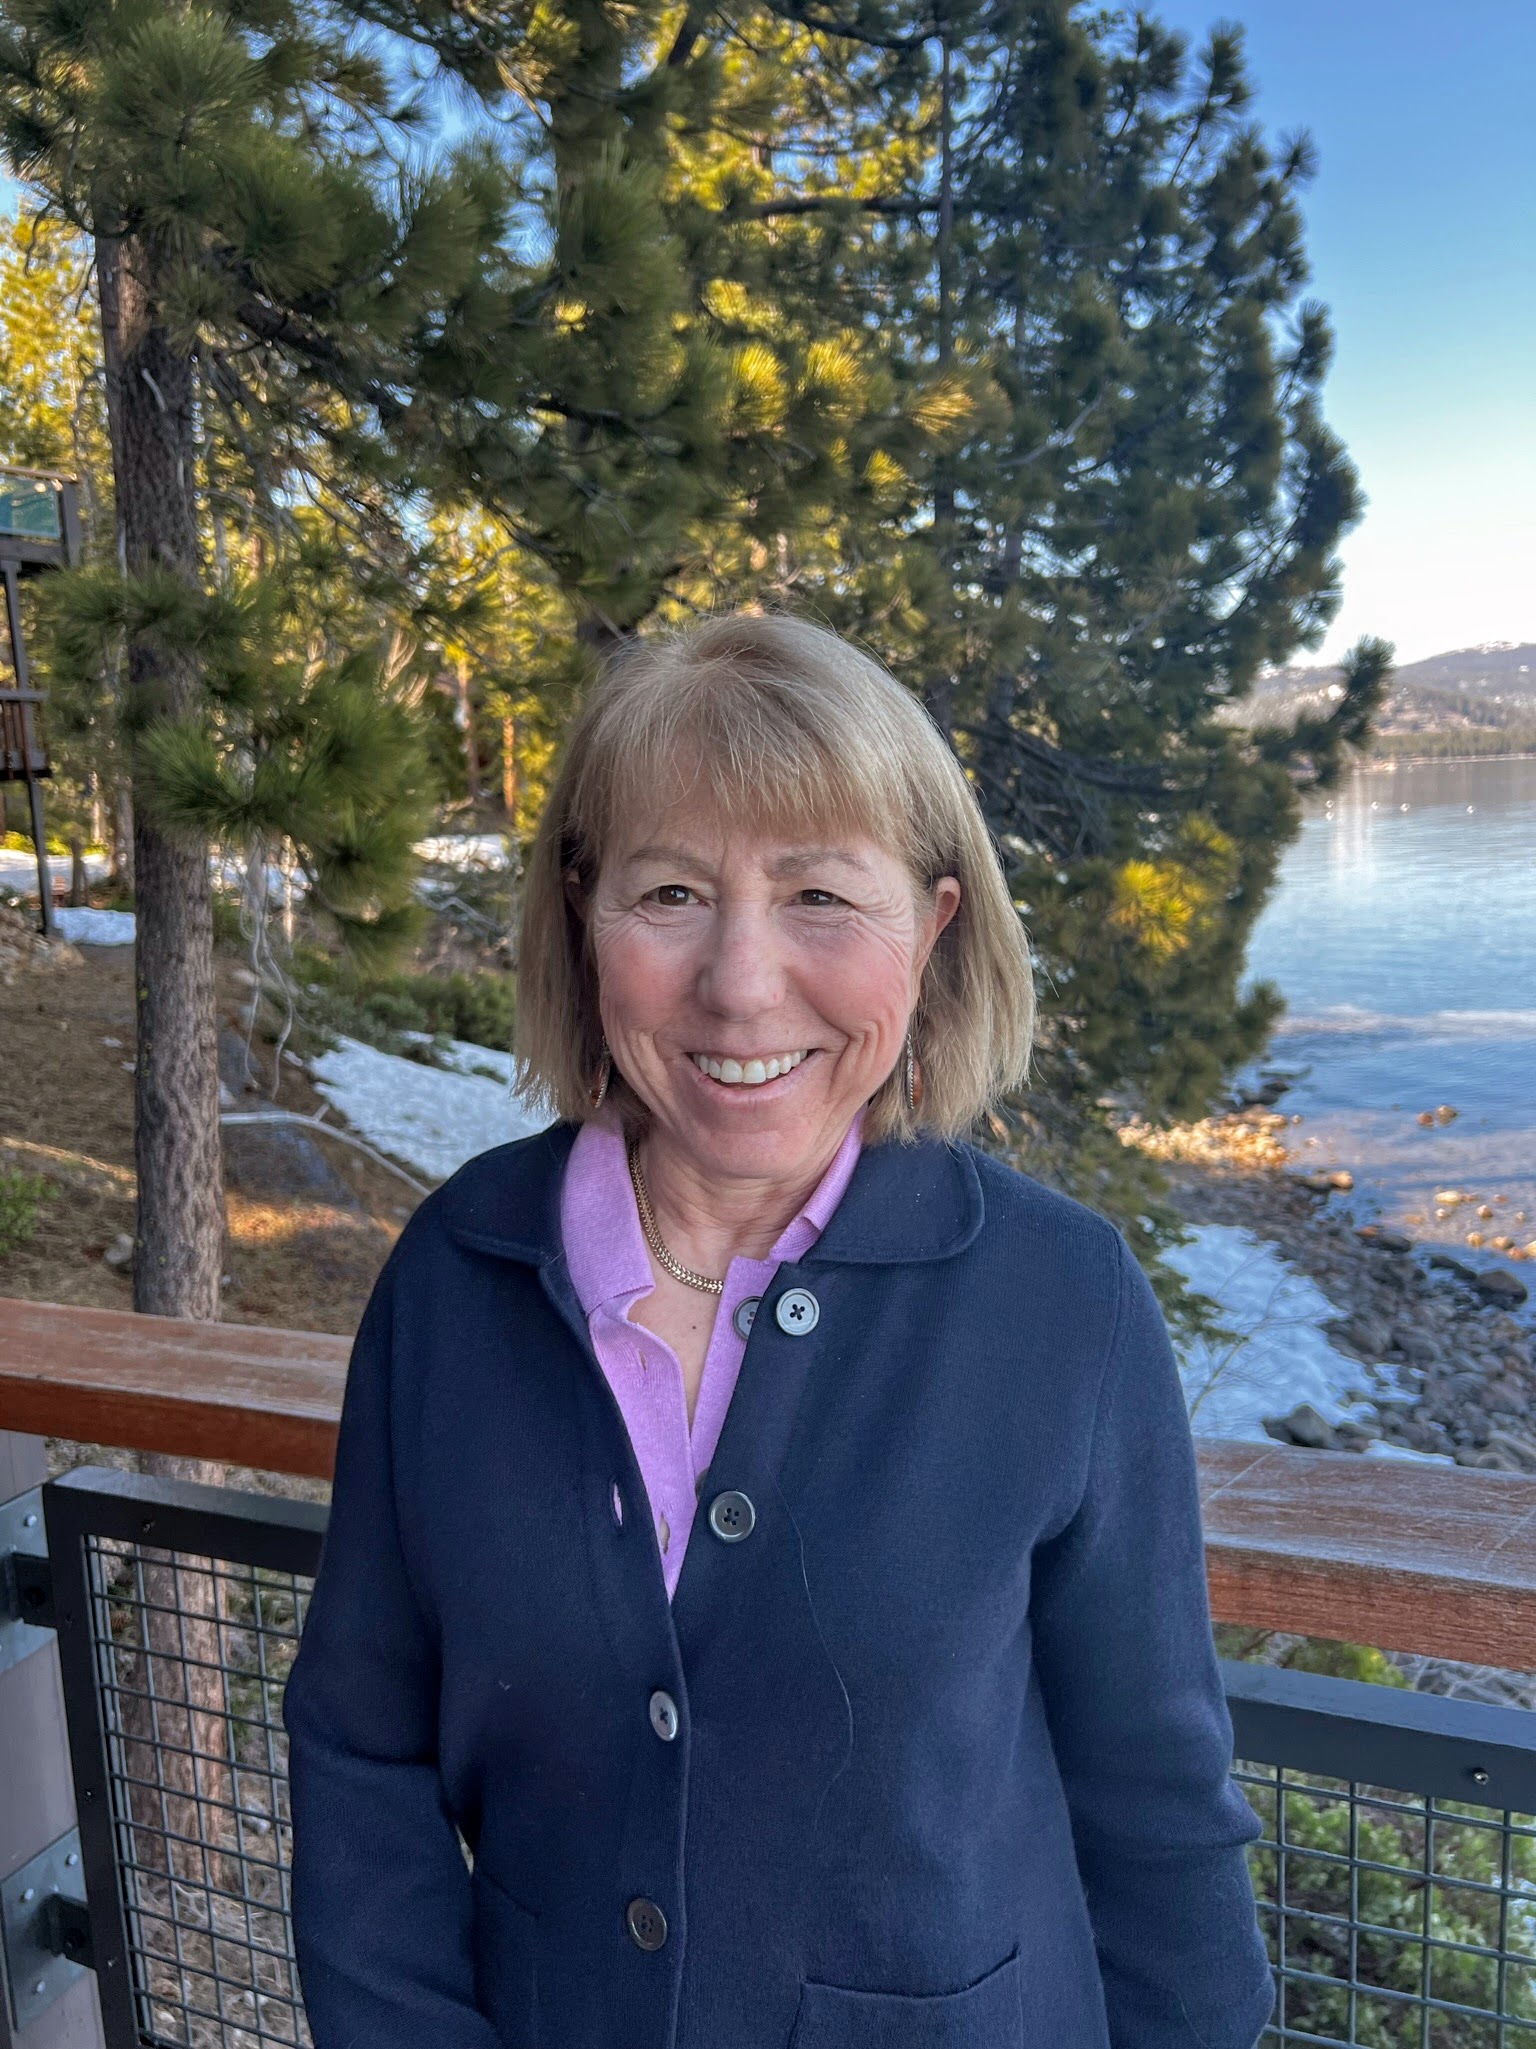 Debra Meyerson, PhD outside her home near Lake Tahoe.